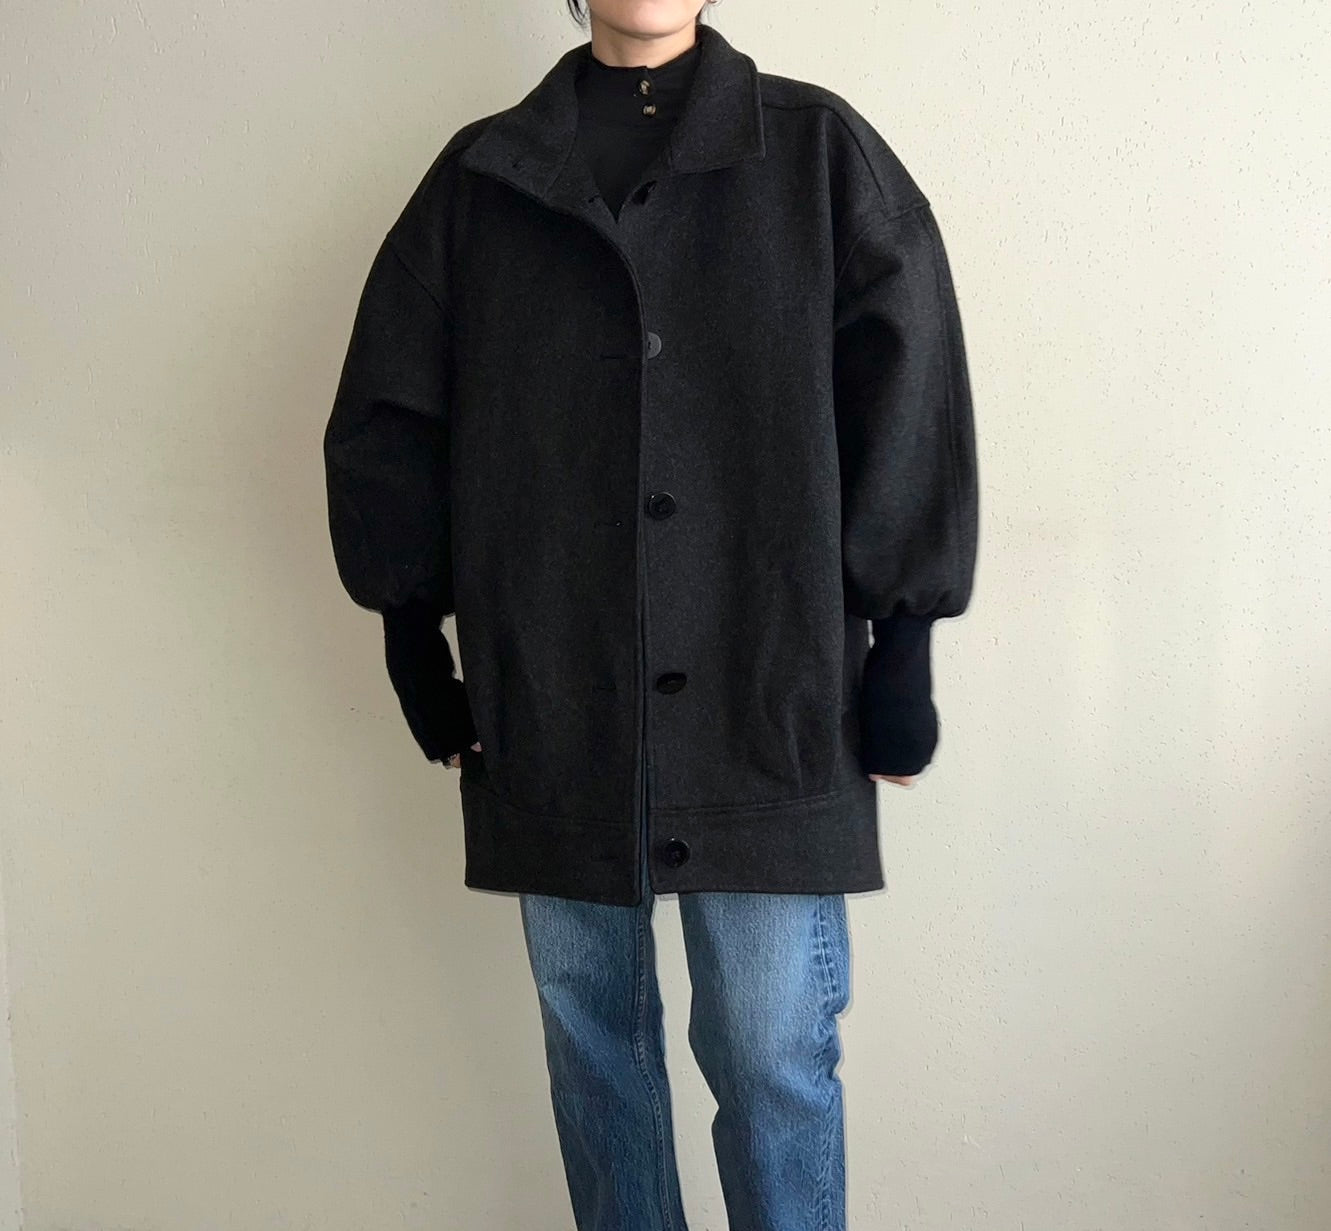 90s "J.Gallery" Wool Jacket